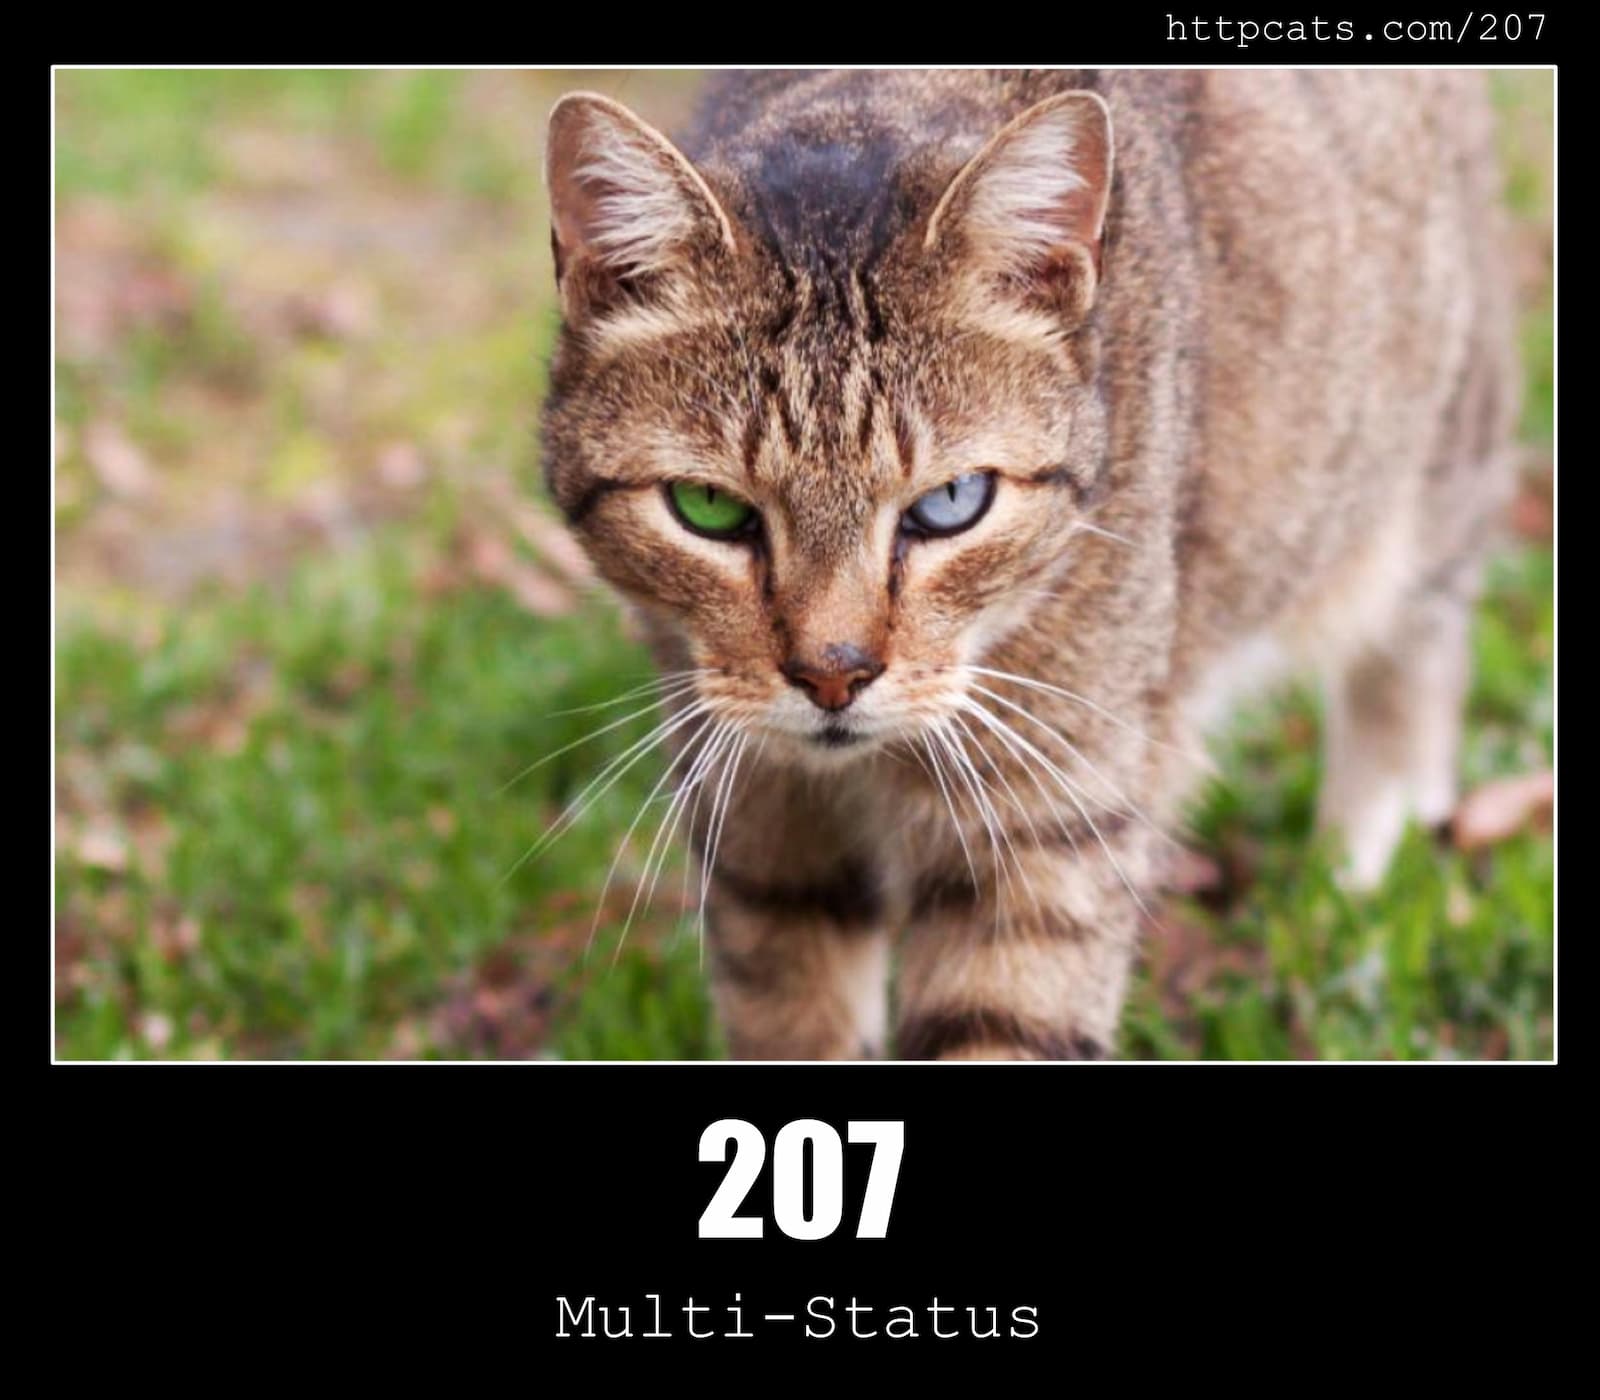 HTTP Status Code 207 Multi-Status & Cats